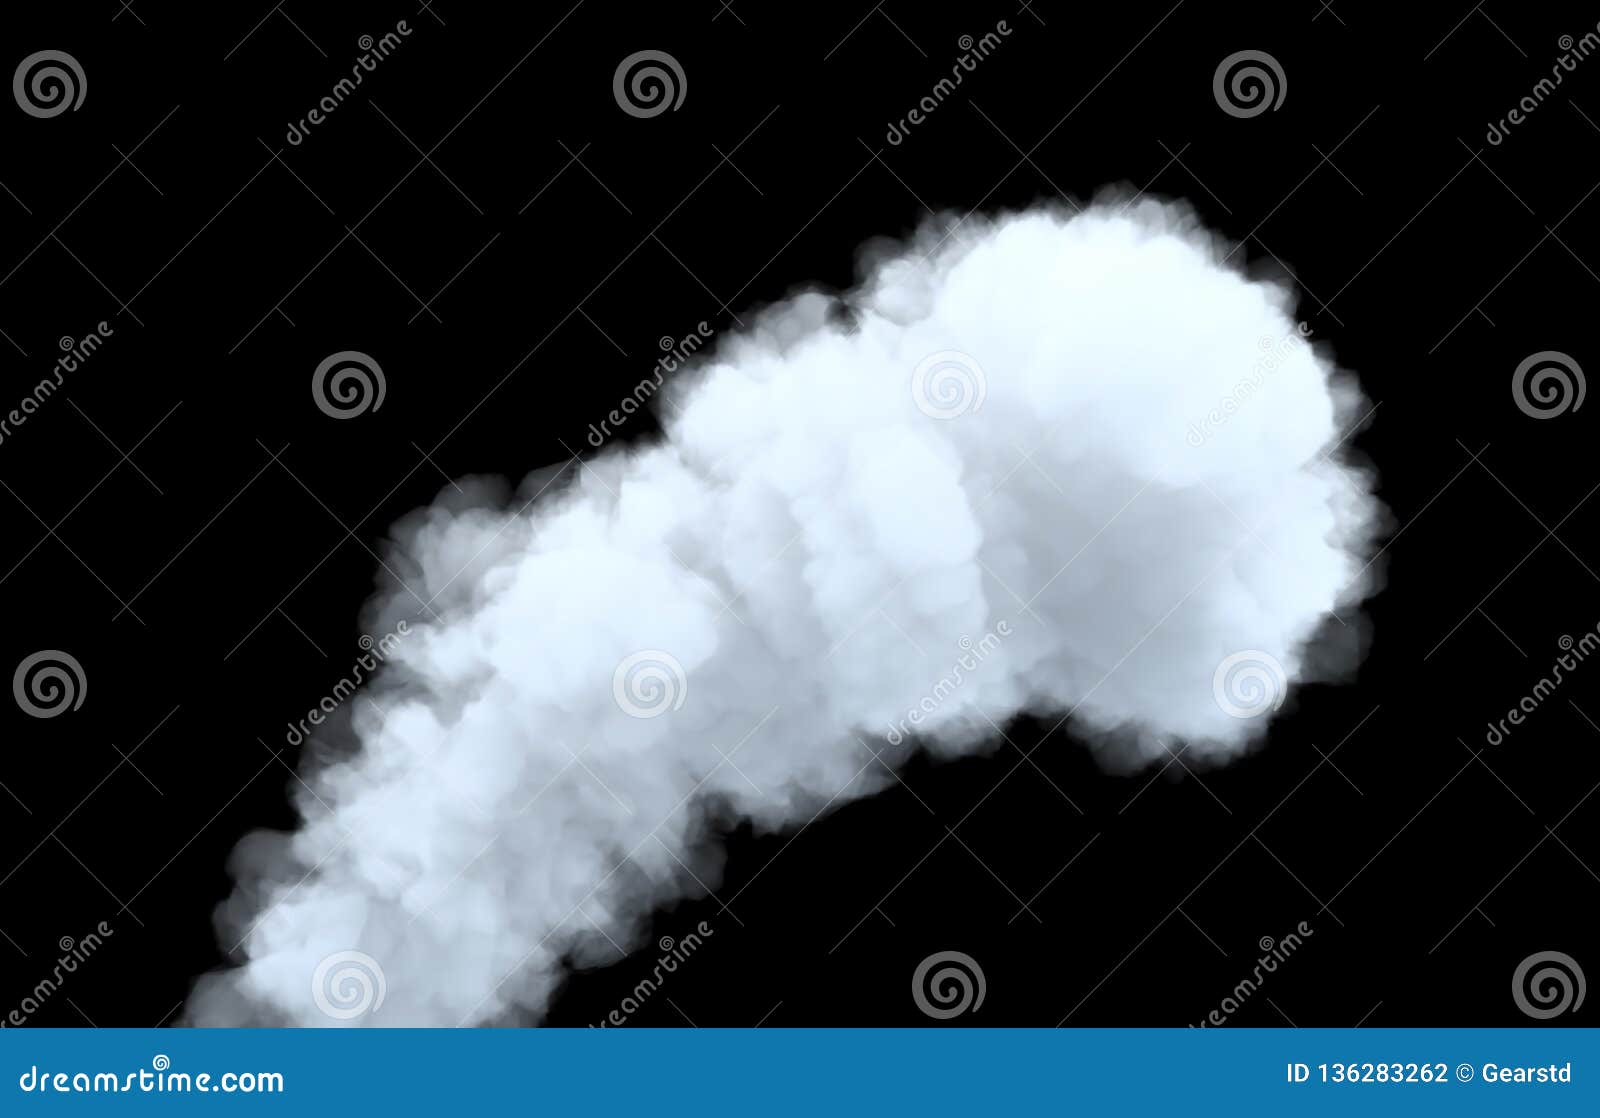 что такое облако steam фото 78